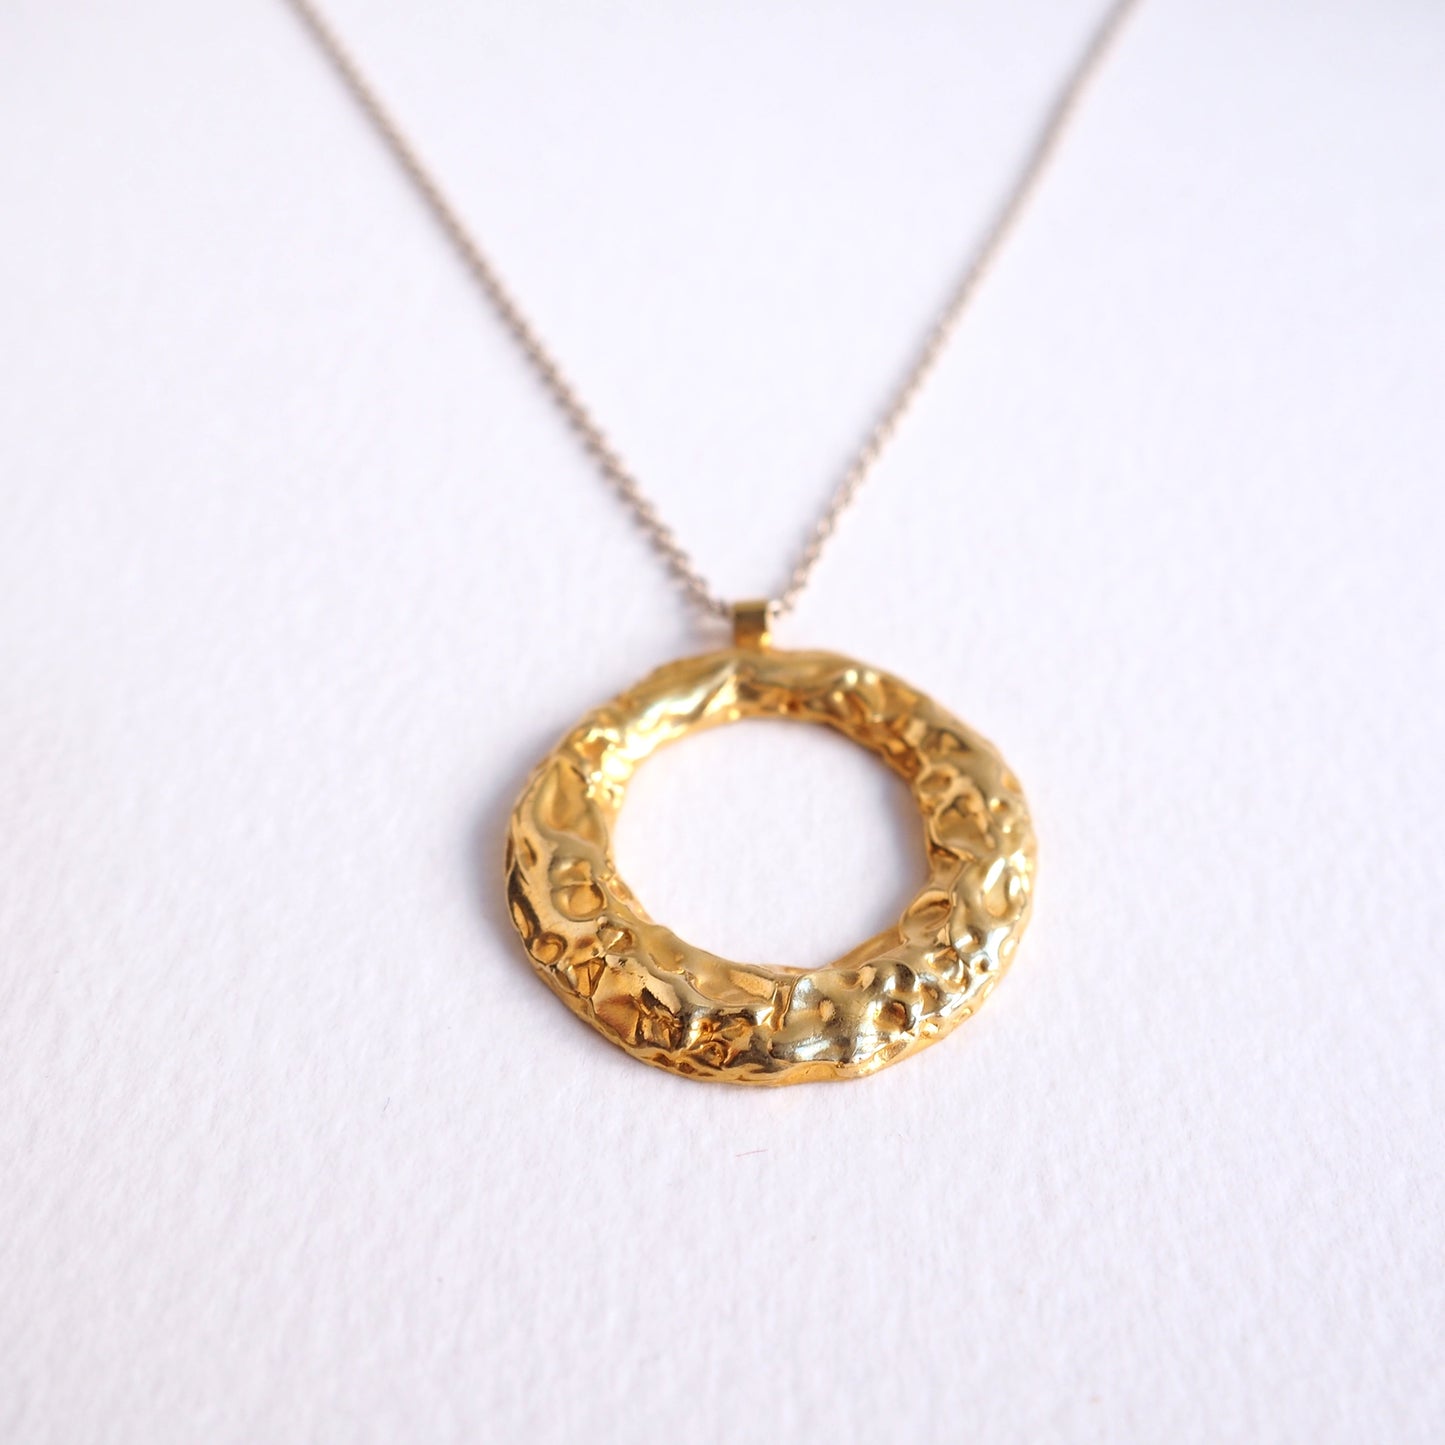 Marea Necklace sea Ocean Organic jewelry ring silver gold handmade handcrafted fashion custom bespoke